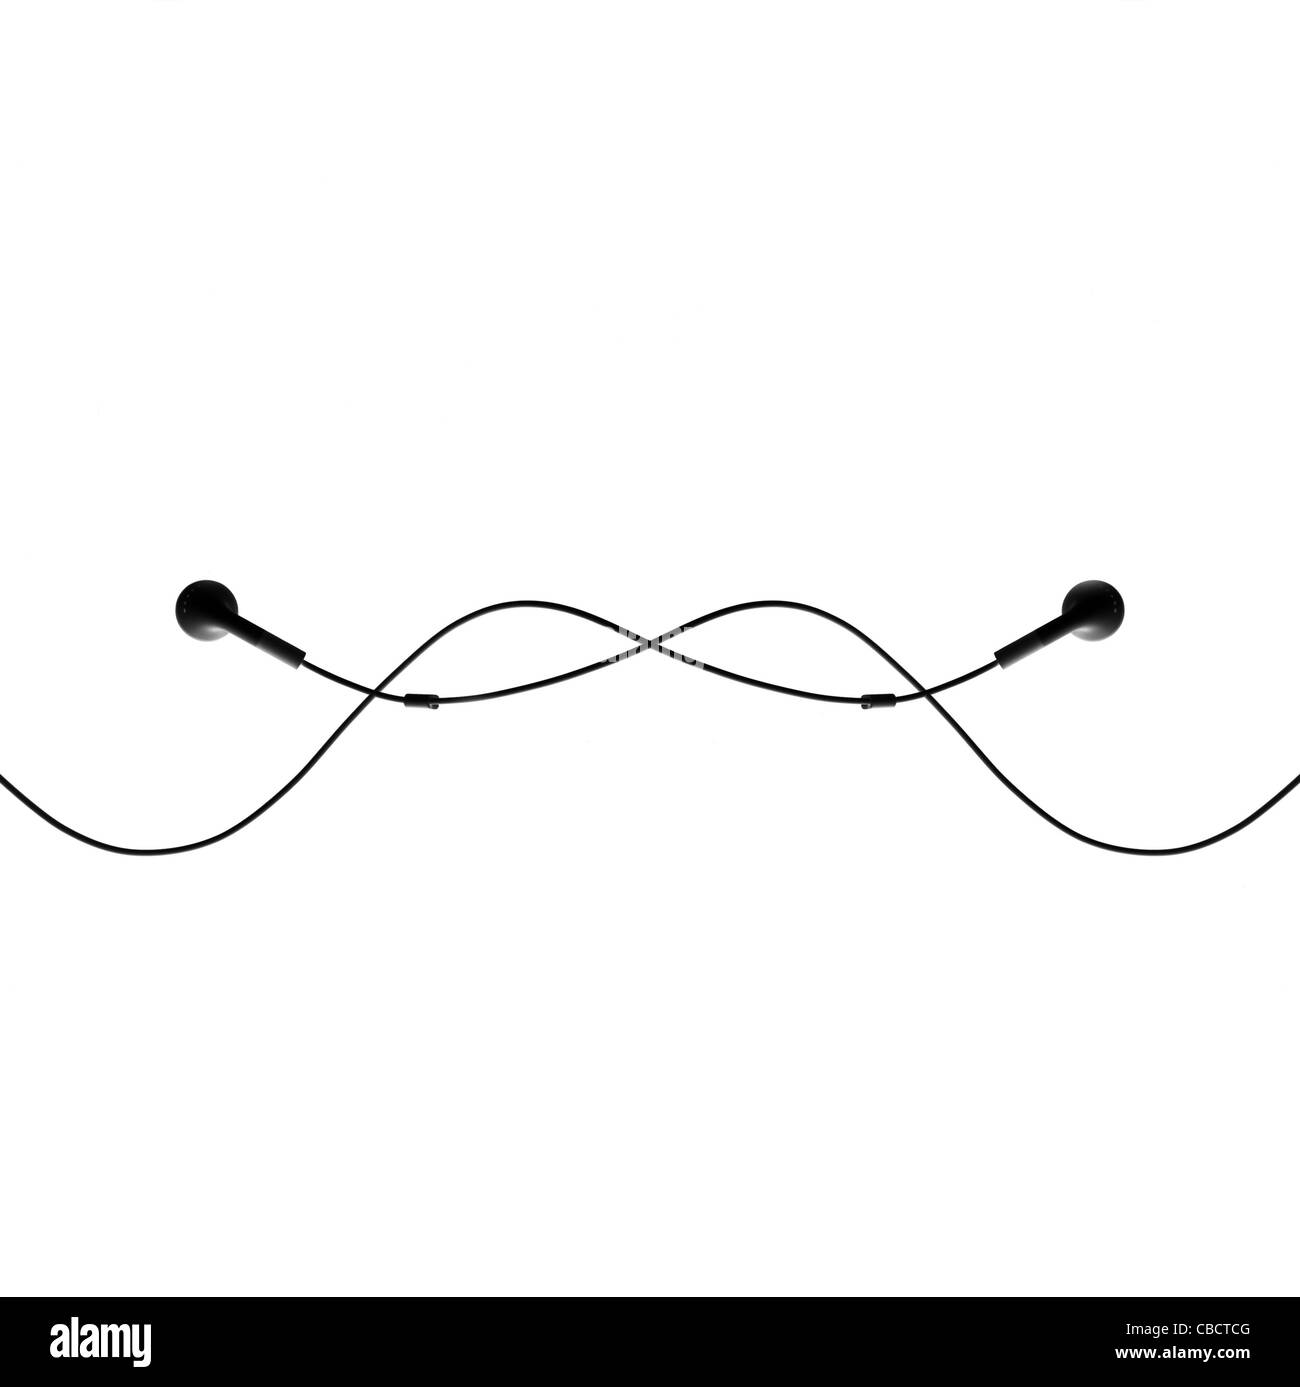 apple earphones in an abstract way Stock Photo